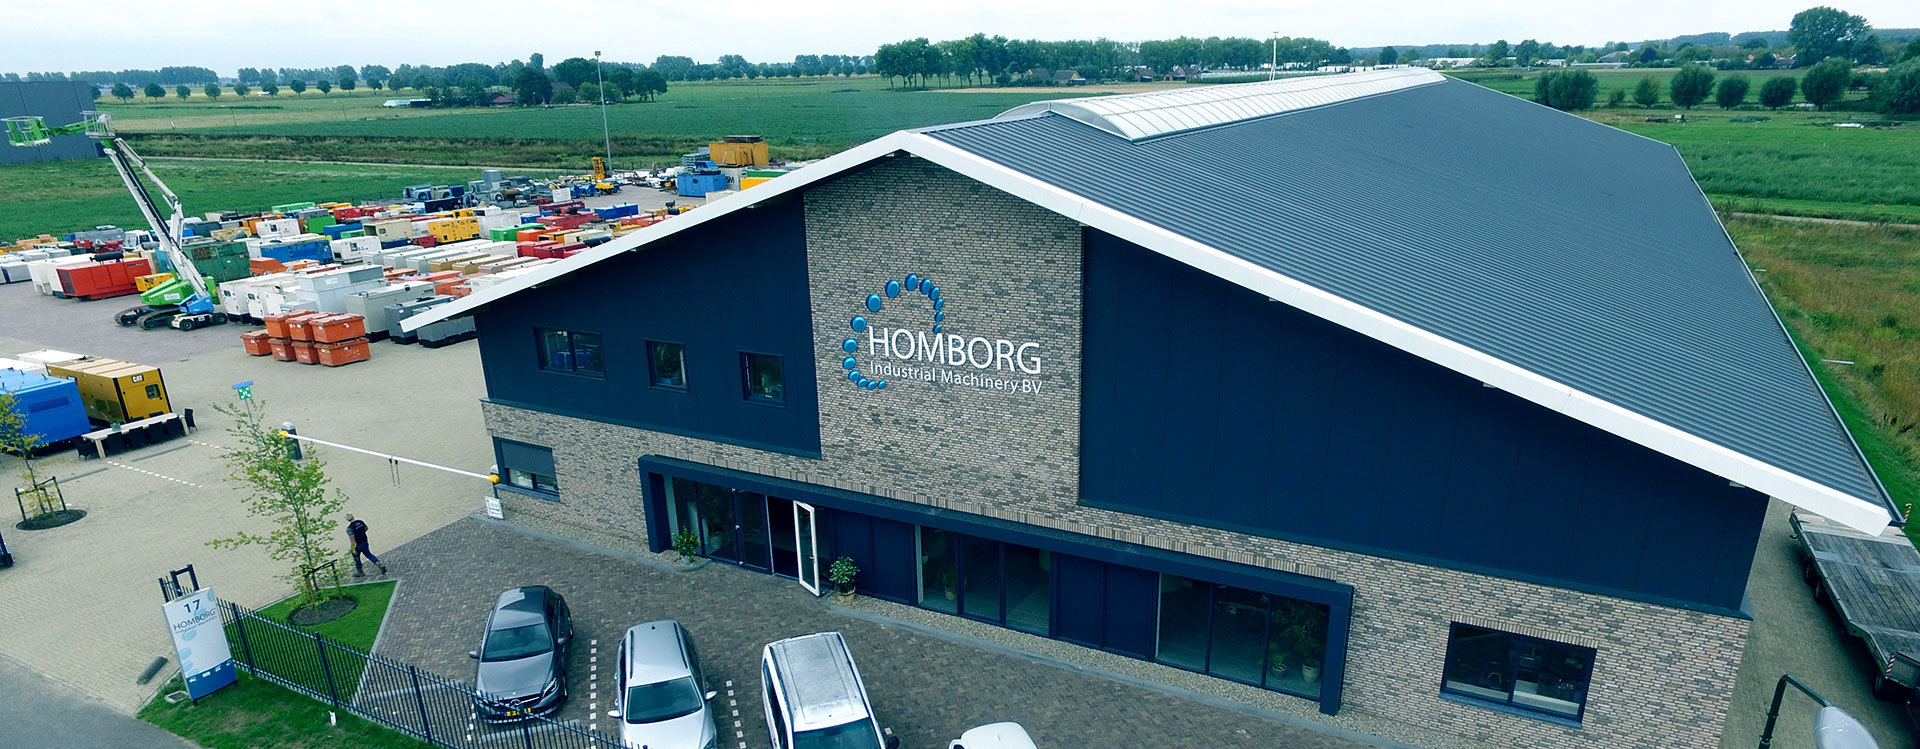 Homborg Industrial Machinery B.V.  - Annonce de vente undefined: photos 1